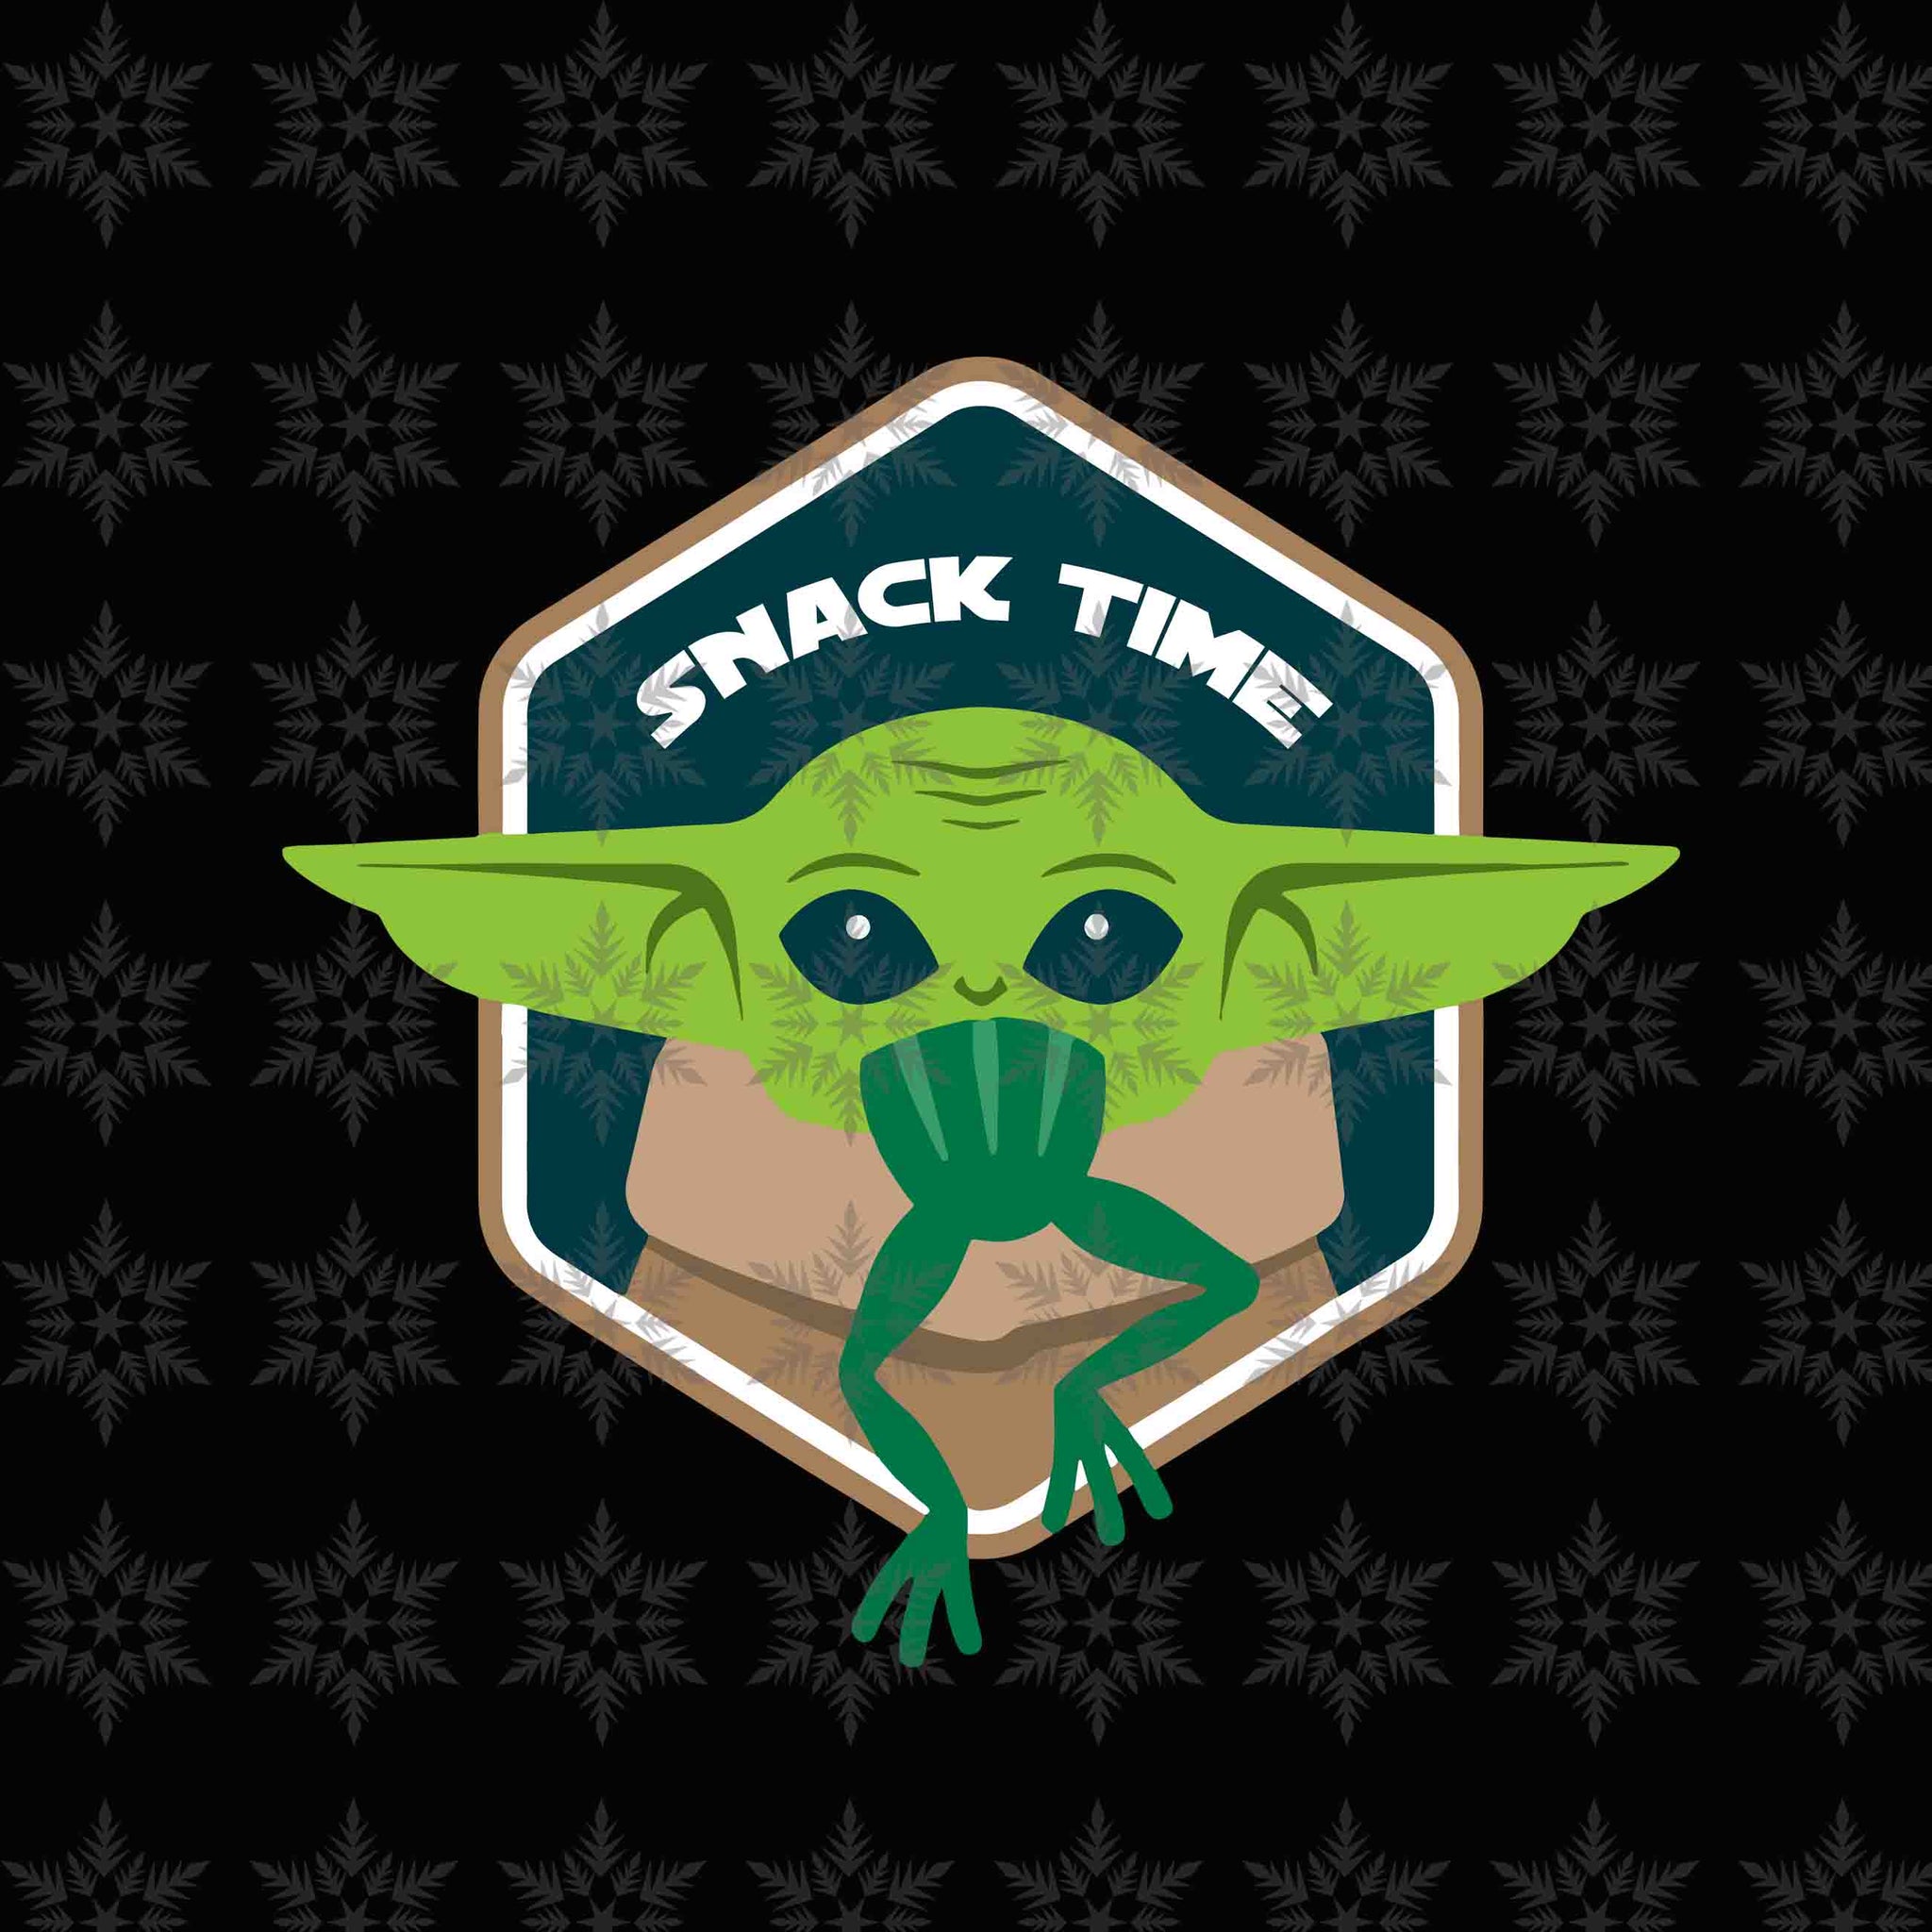 Snack Time, Baby Yoda svg, Baby Yoda vector, Baby Yoda digital file, Star Wars svg, Star Wars vector, The Mandalorian The Child svg